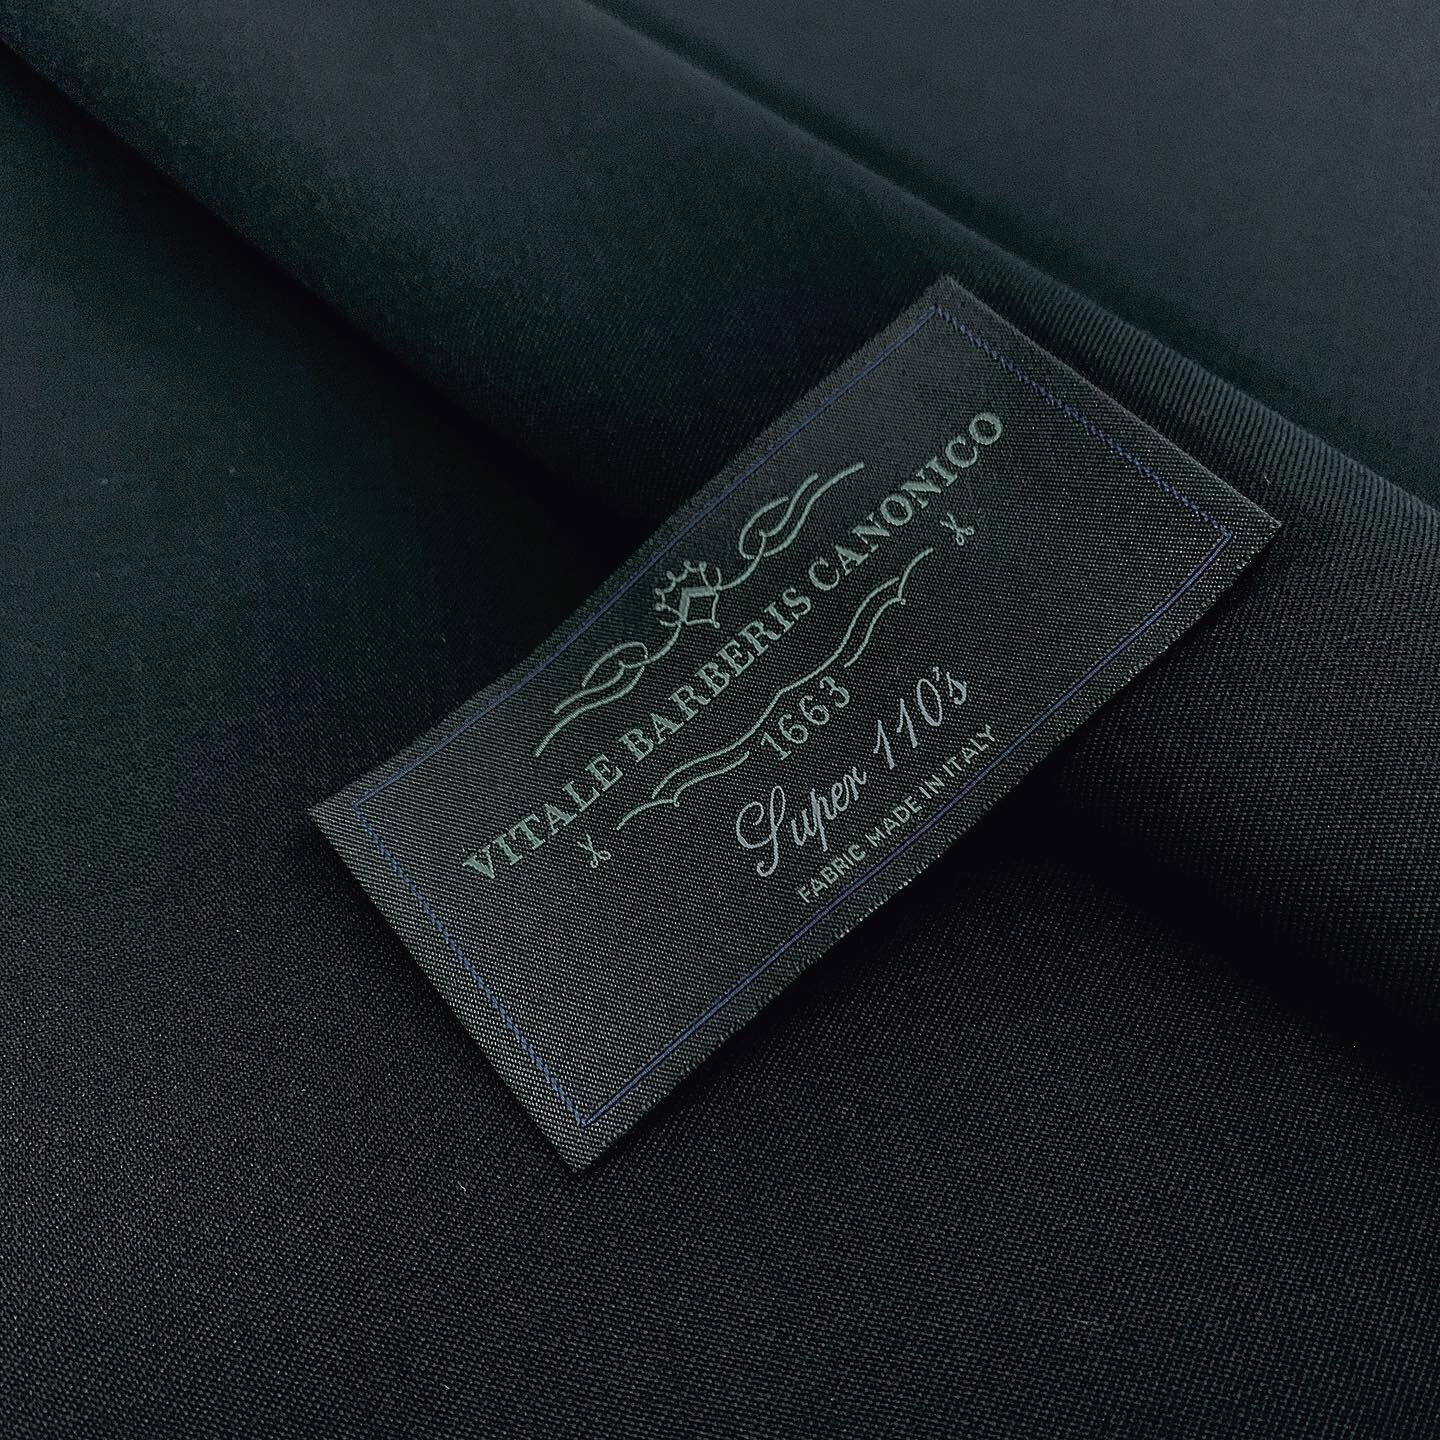 The Perfect Black Tuxedo Fabric 
Vitale Barberis Super Wool 

#benjaminwoollens #fabric #fabrics #fashionfabrics #southafrica #tuxedo #bespoke #madeinitaly #Johannesburg #tailoring #ladiesfashion #luxury #capetown #pretoria #mensfashion #quality #sty